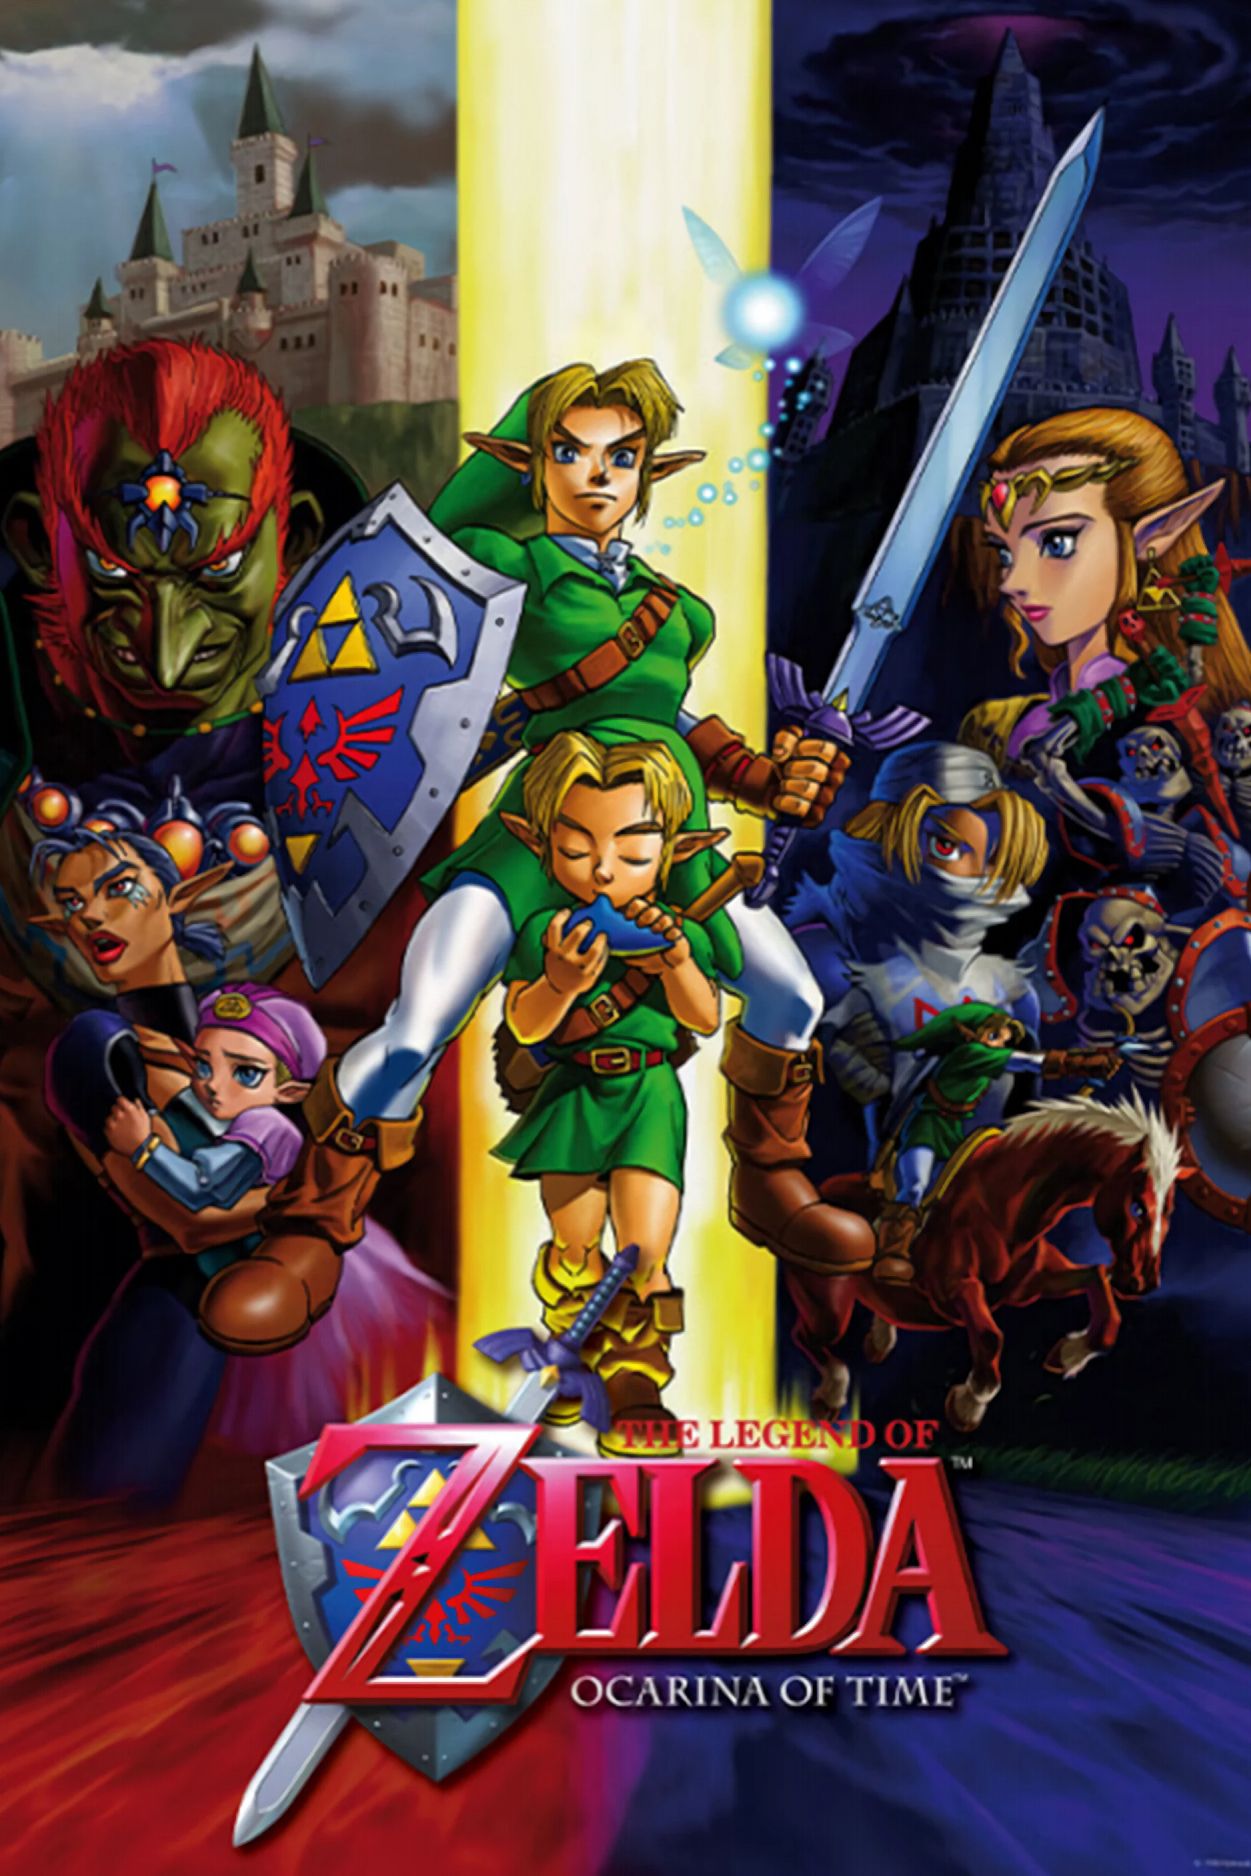 The Legend of Zelda Ocarina of Time Game Poster